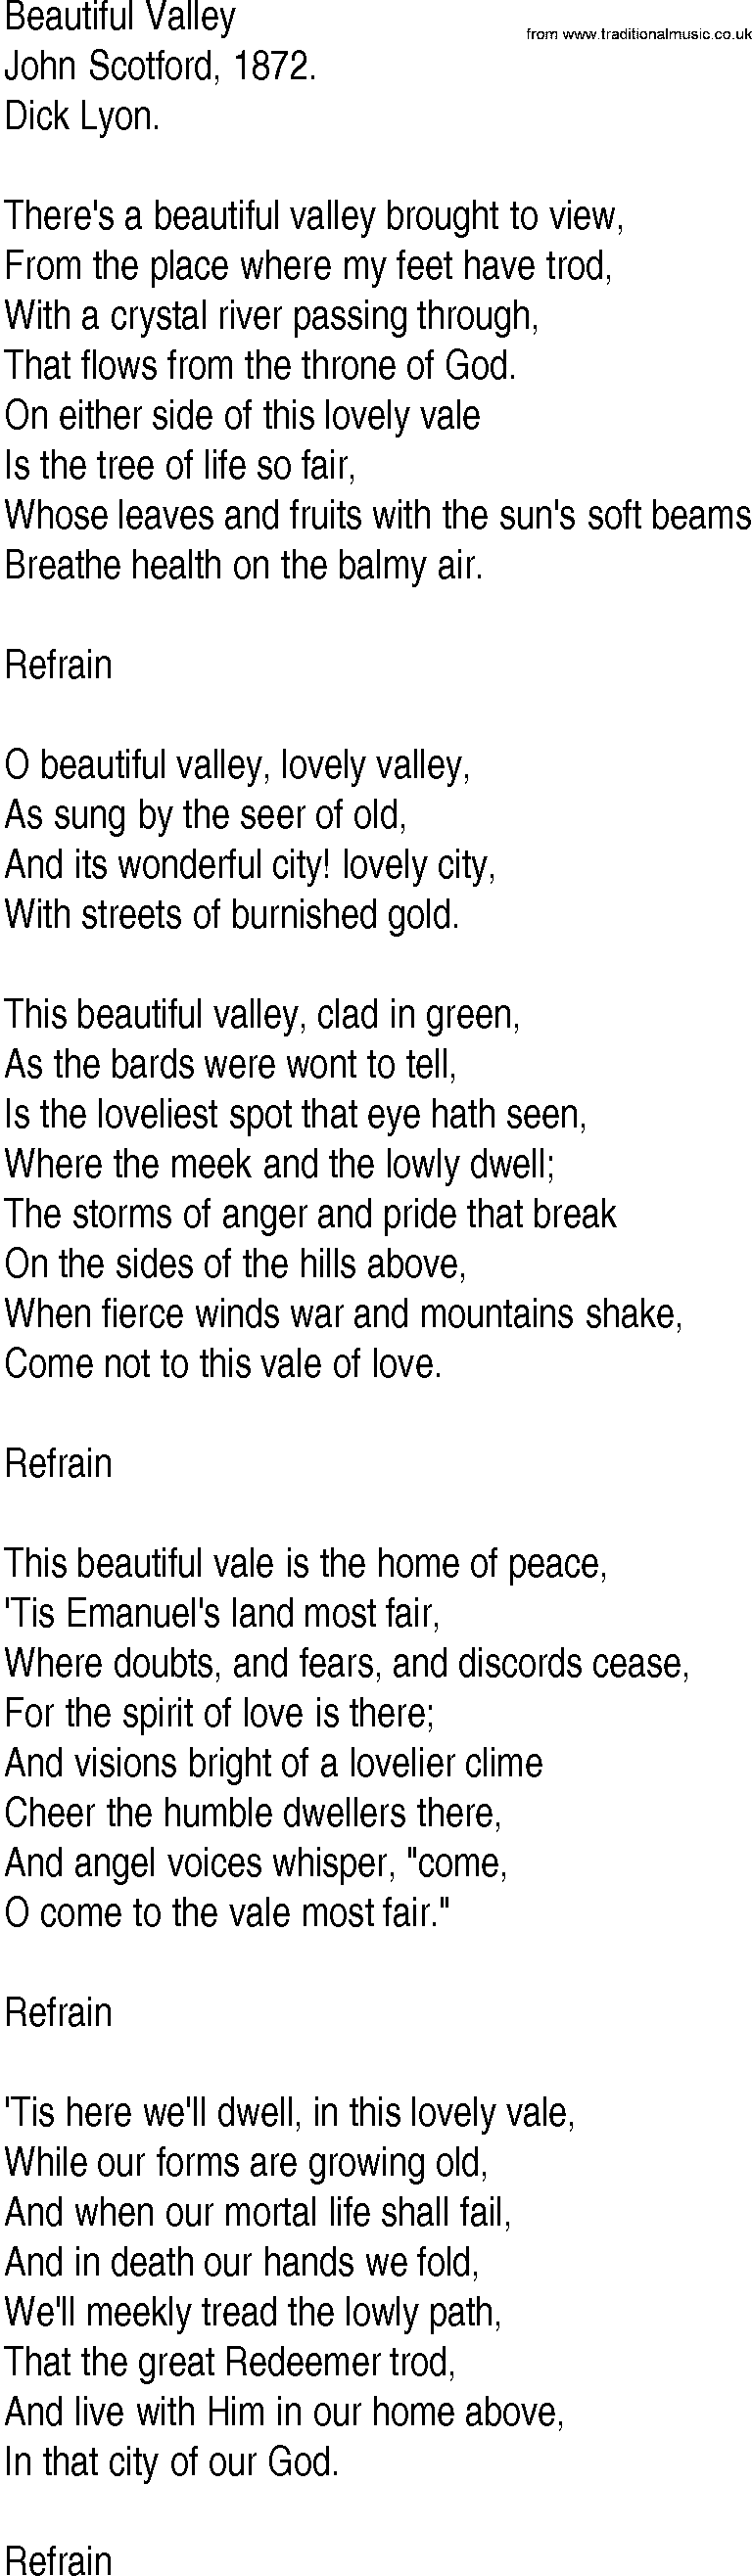 Hymn and Gospel Song: Beautiful Valley by John Scotford lyrics